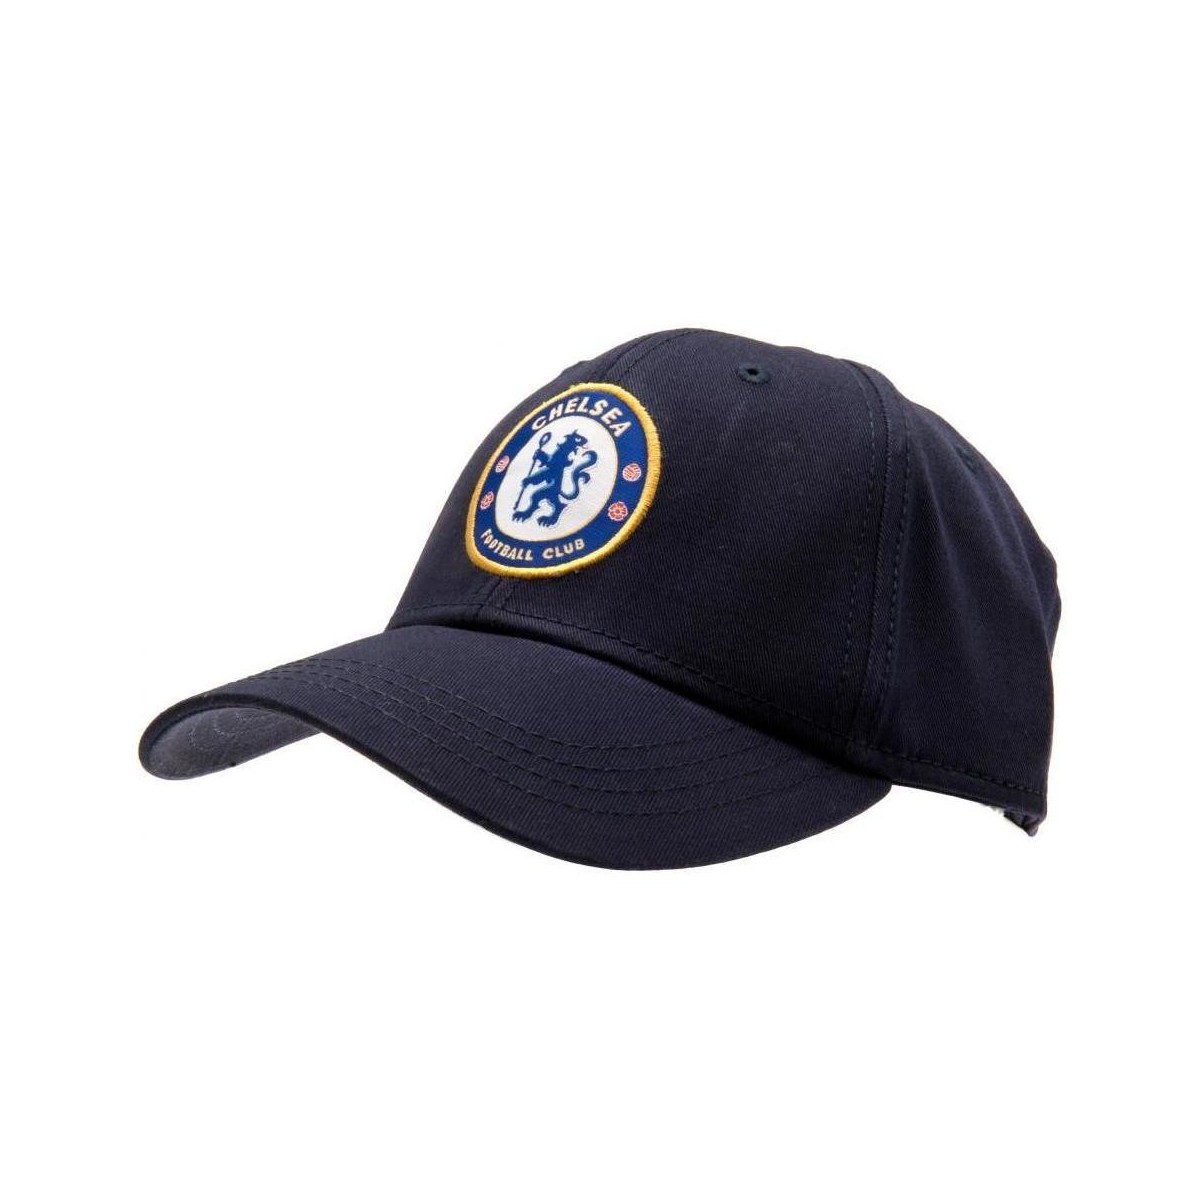 Accessori Cappellini Chelsea Fc TA2965 Blu